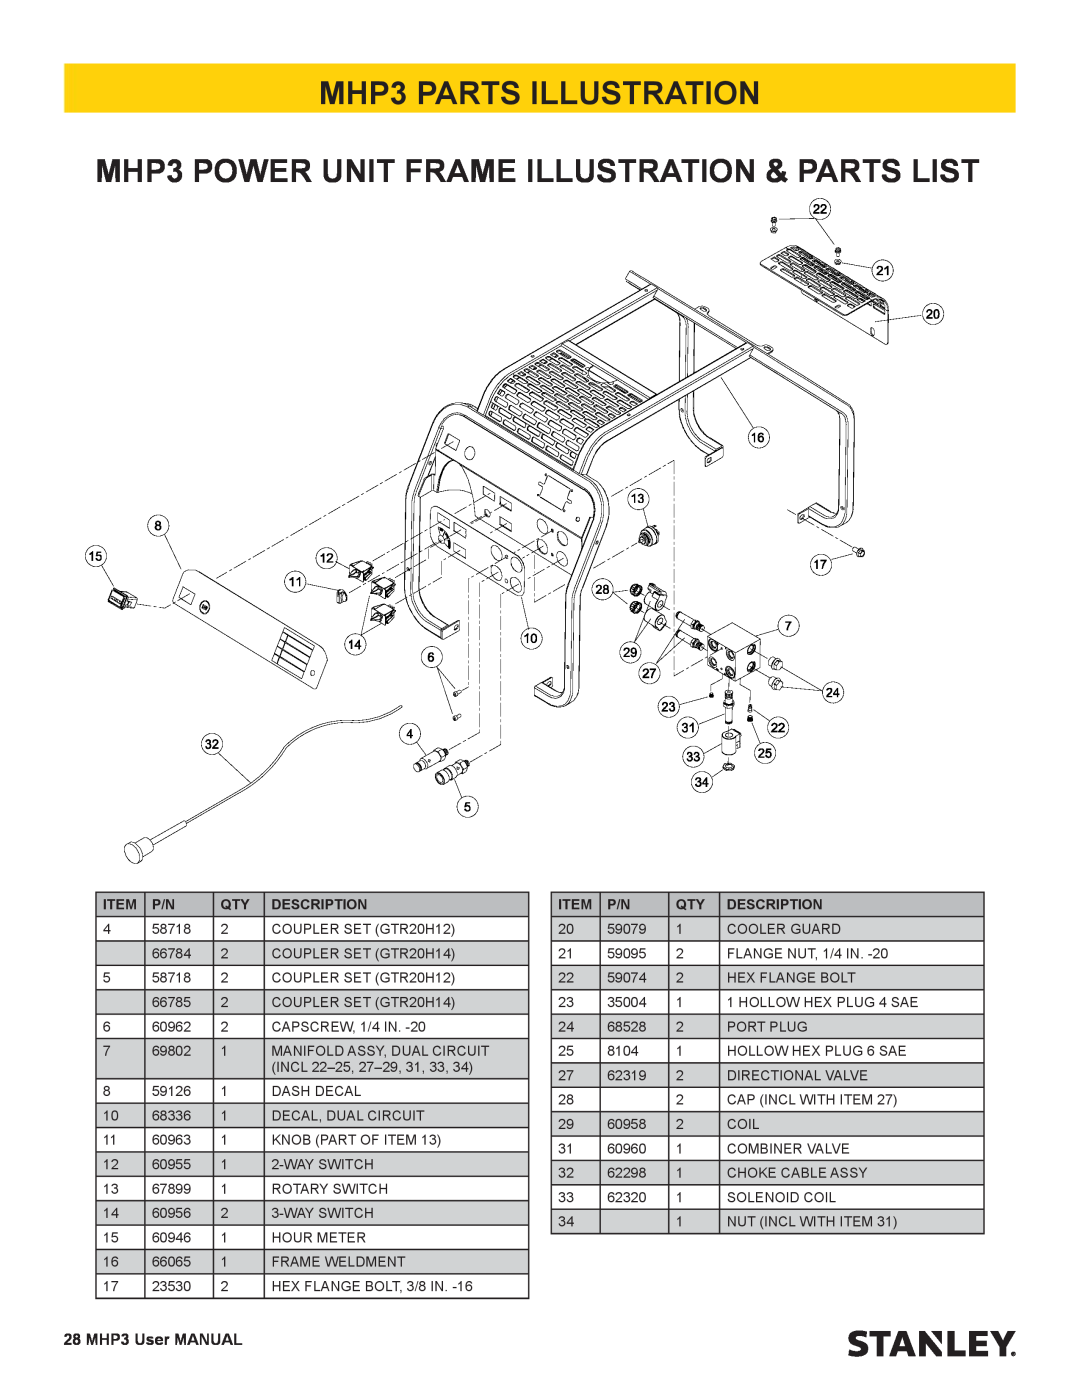 Stanley Black & Decker user manual MHP3 PARTS ILLUSTRATION, MHP3 POWER UNIT FRAME ILLUSTRATION & PARTS LIST 